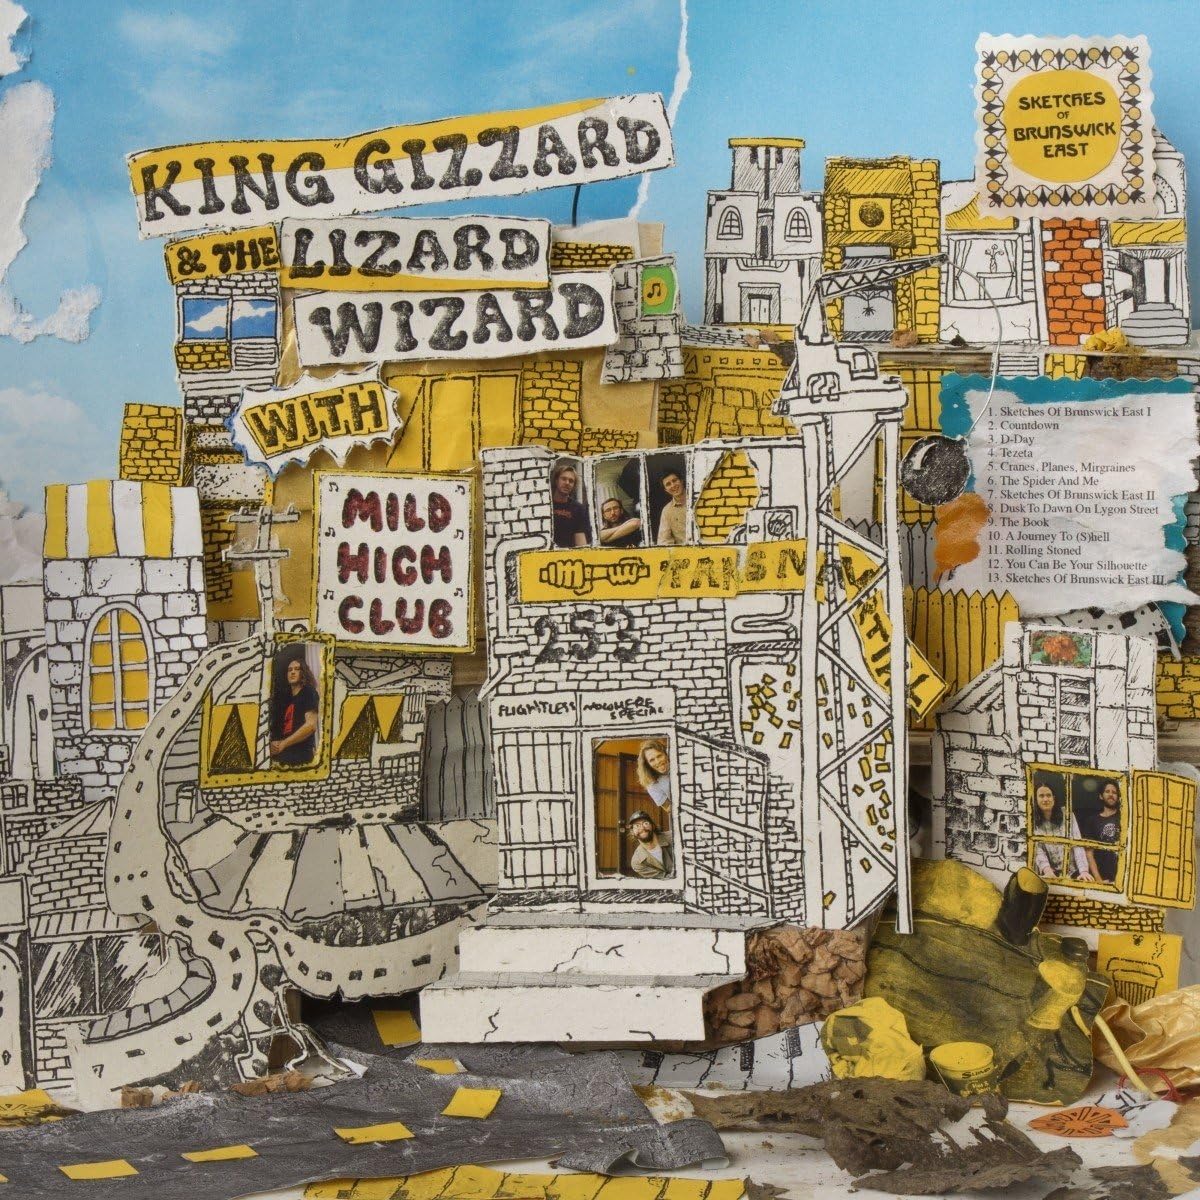 Sketches Of Brunswick East - Vinyl | King Gizzard & the Lizard Wizard, King Gizzard & the Lizard Wizard